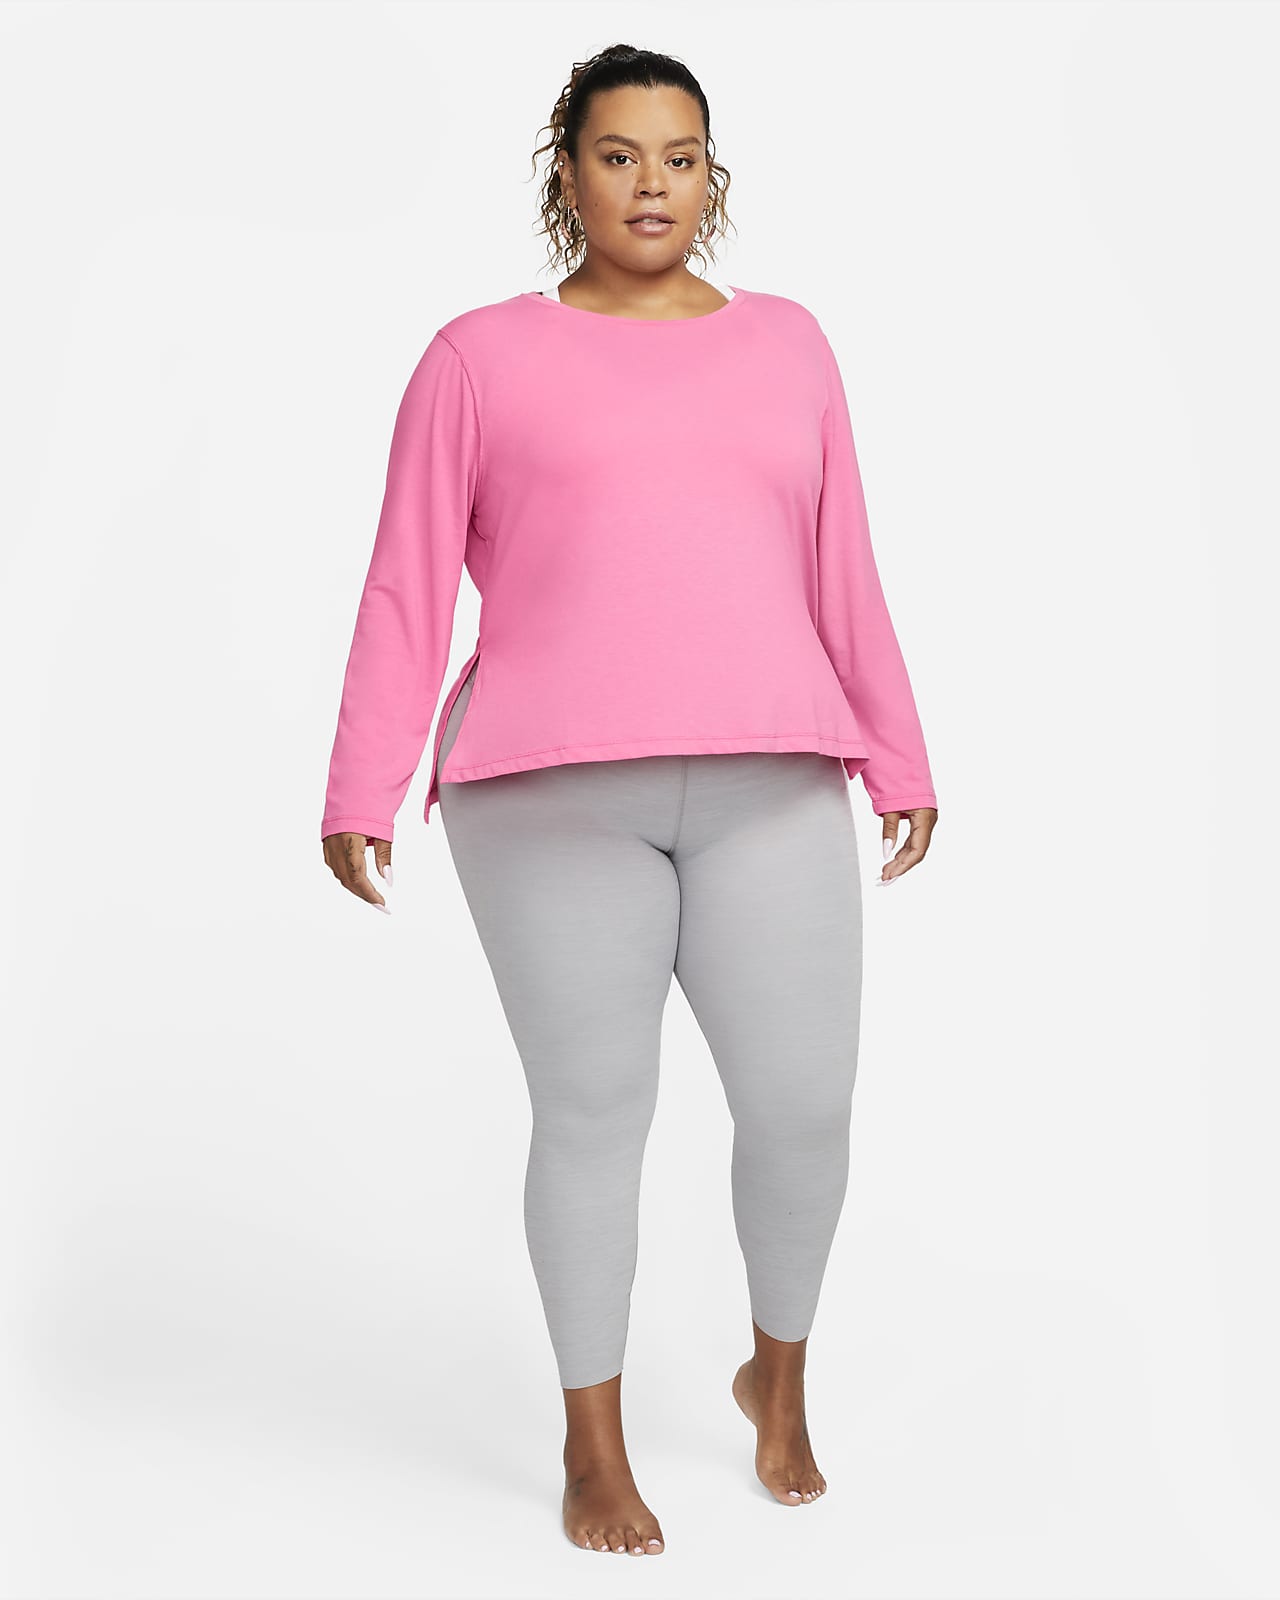 Nike Yoga Dri-FIT Women's Long-Sleeve Top (Plus Size)